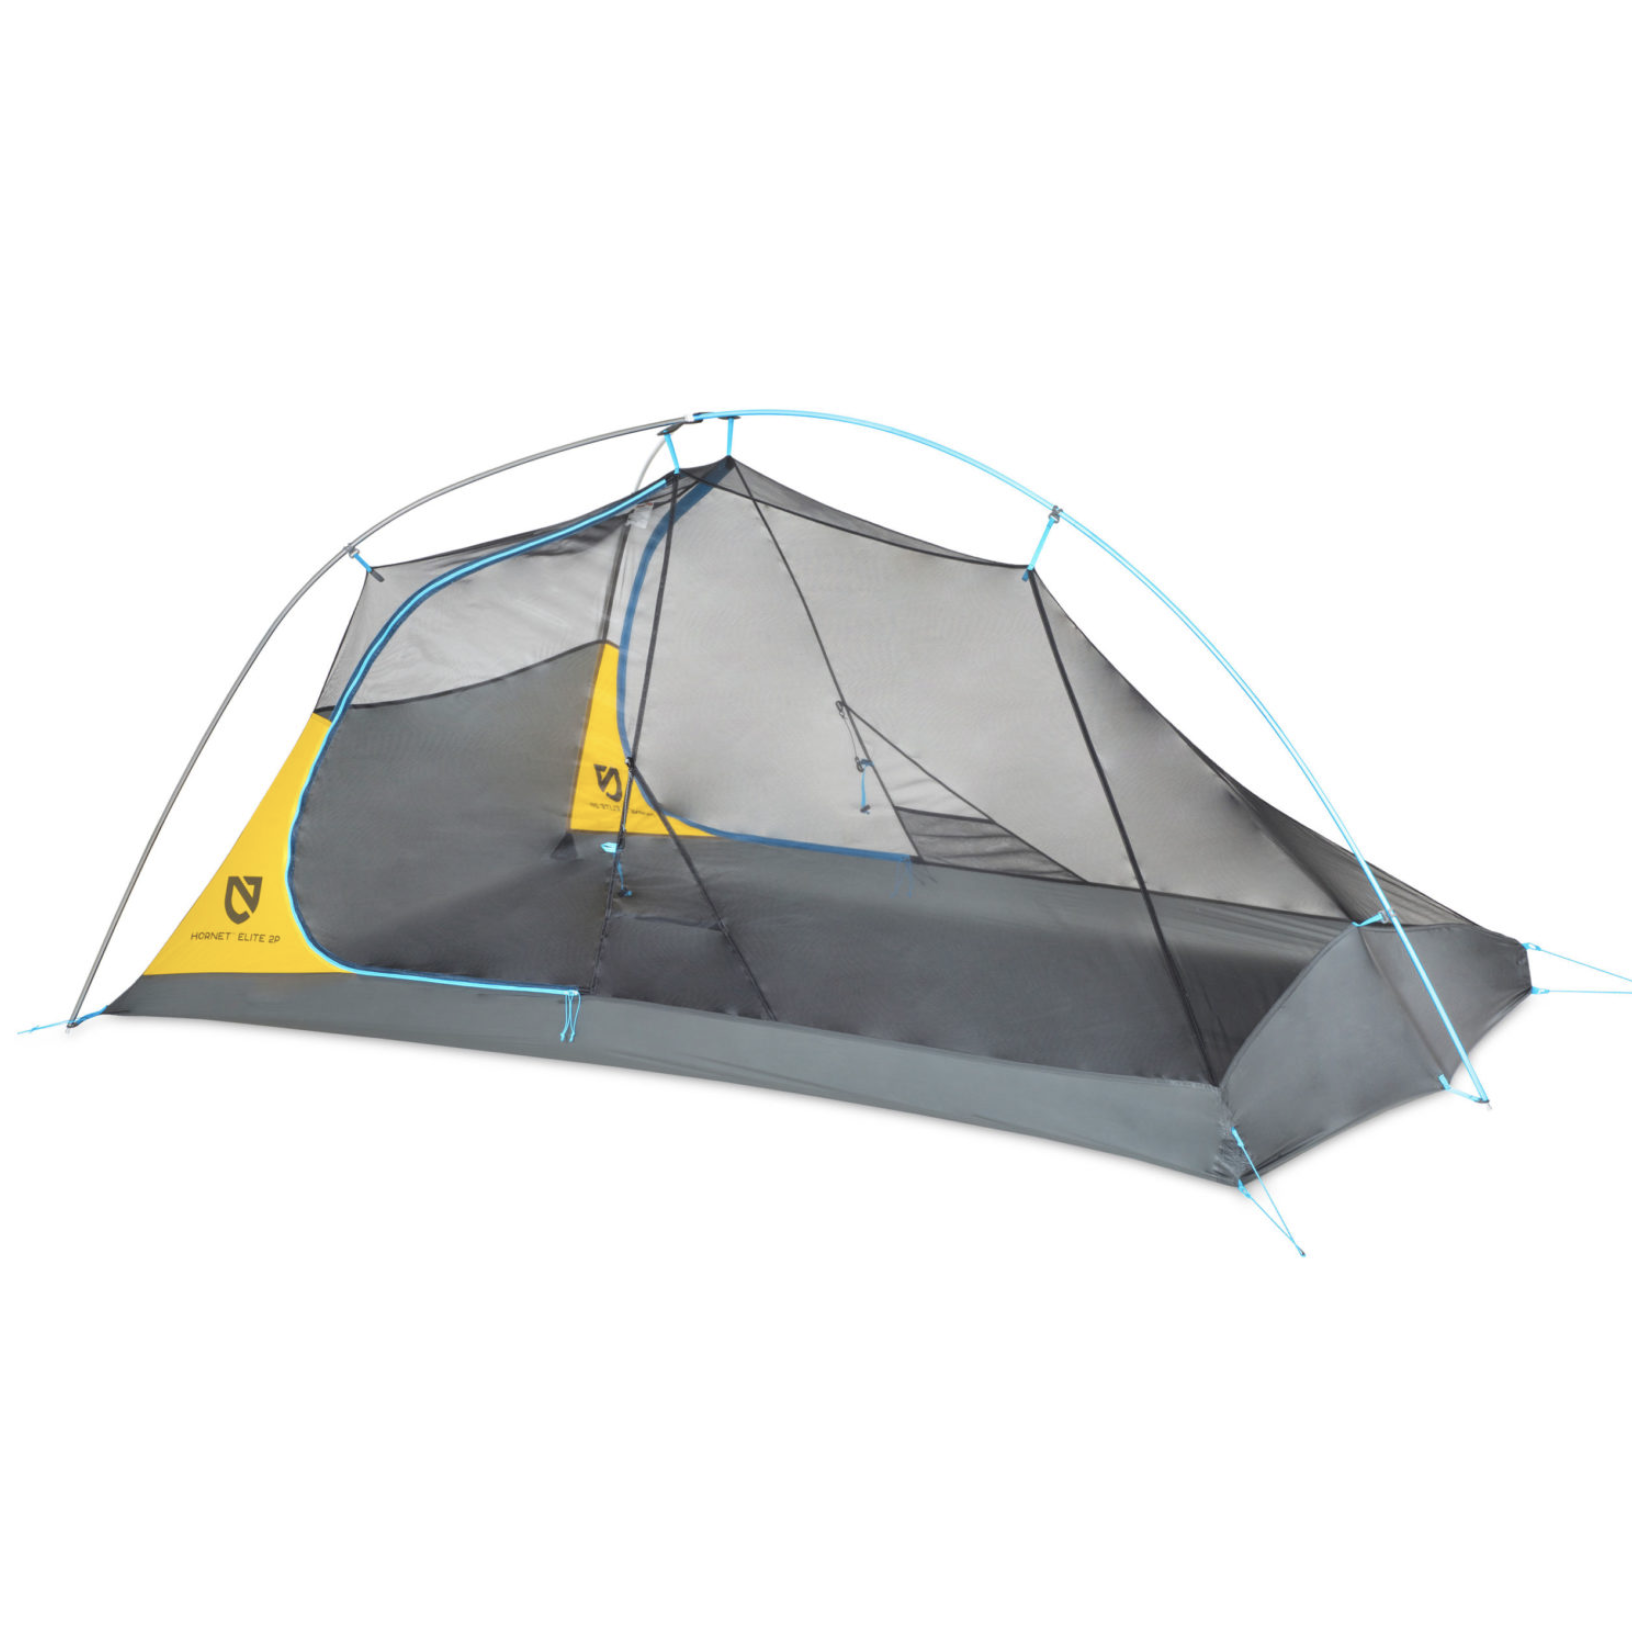 Omgeving serveerster paus 2 Person Ultralight Backpacking Tent - Gearo